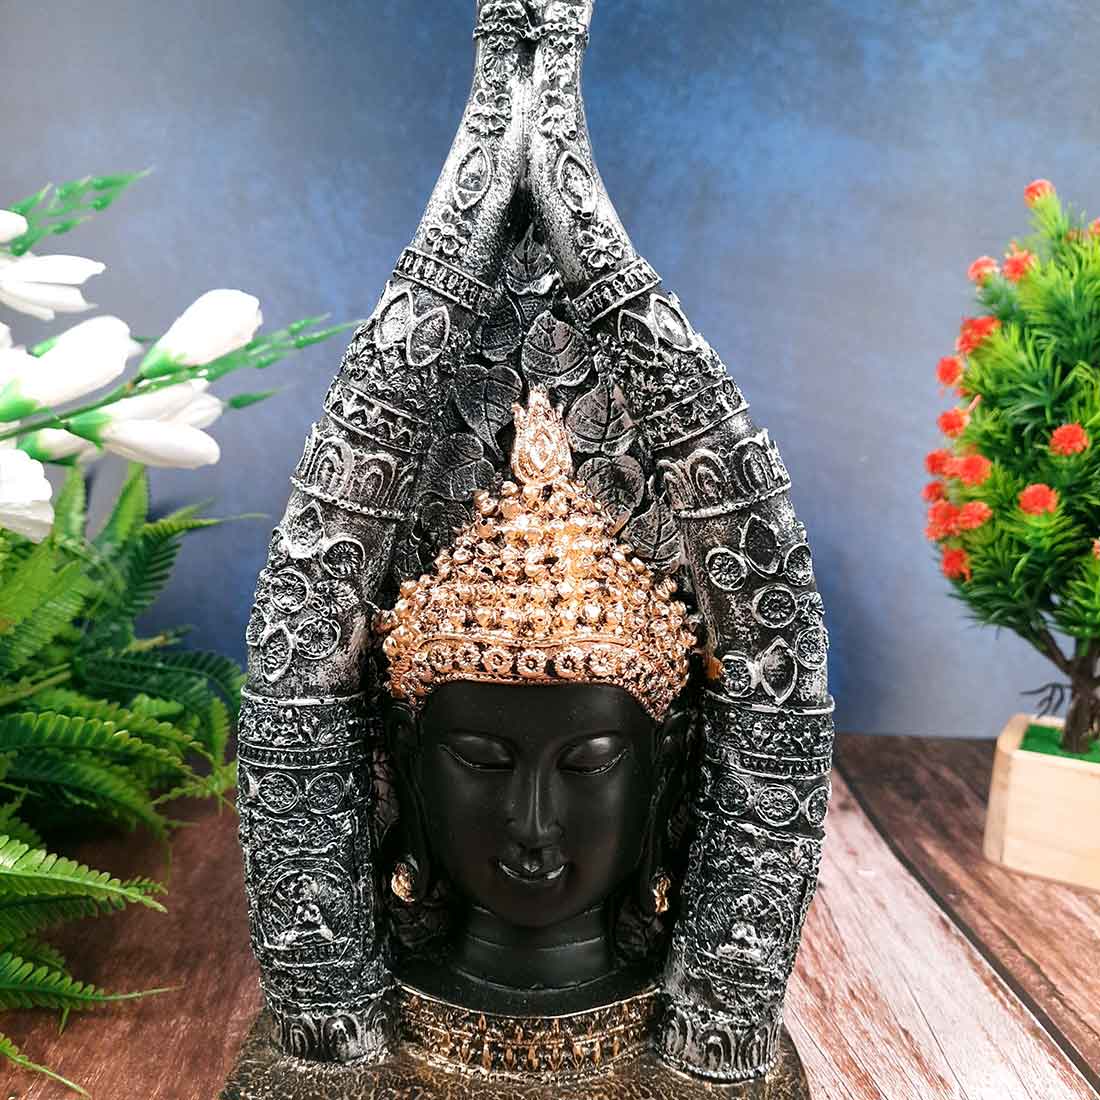 Buddha Head Showpiece | Buddha Face Statue - For Living room, Home, Table, Shelf, Office Decor | Housewarming & Birthday Gift - 12 Inch